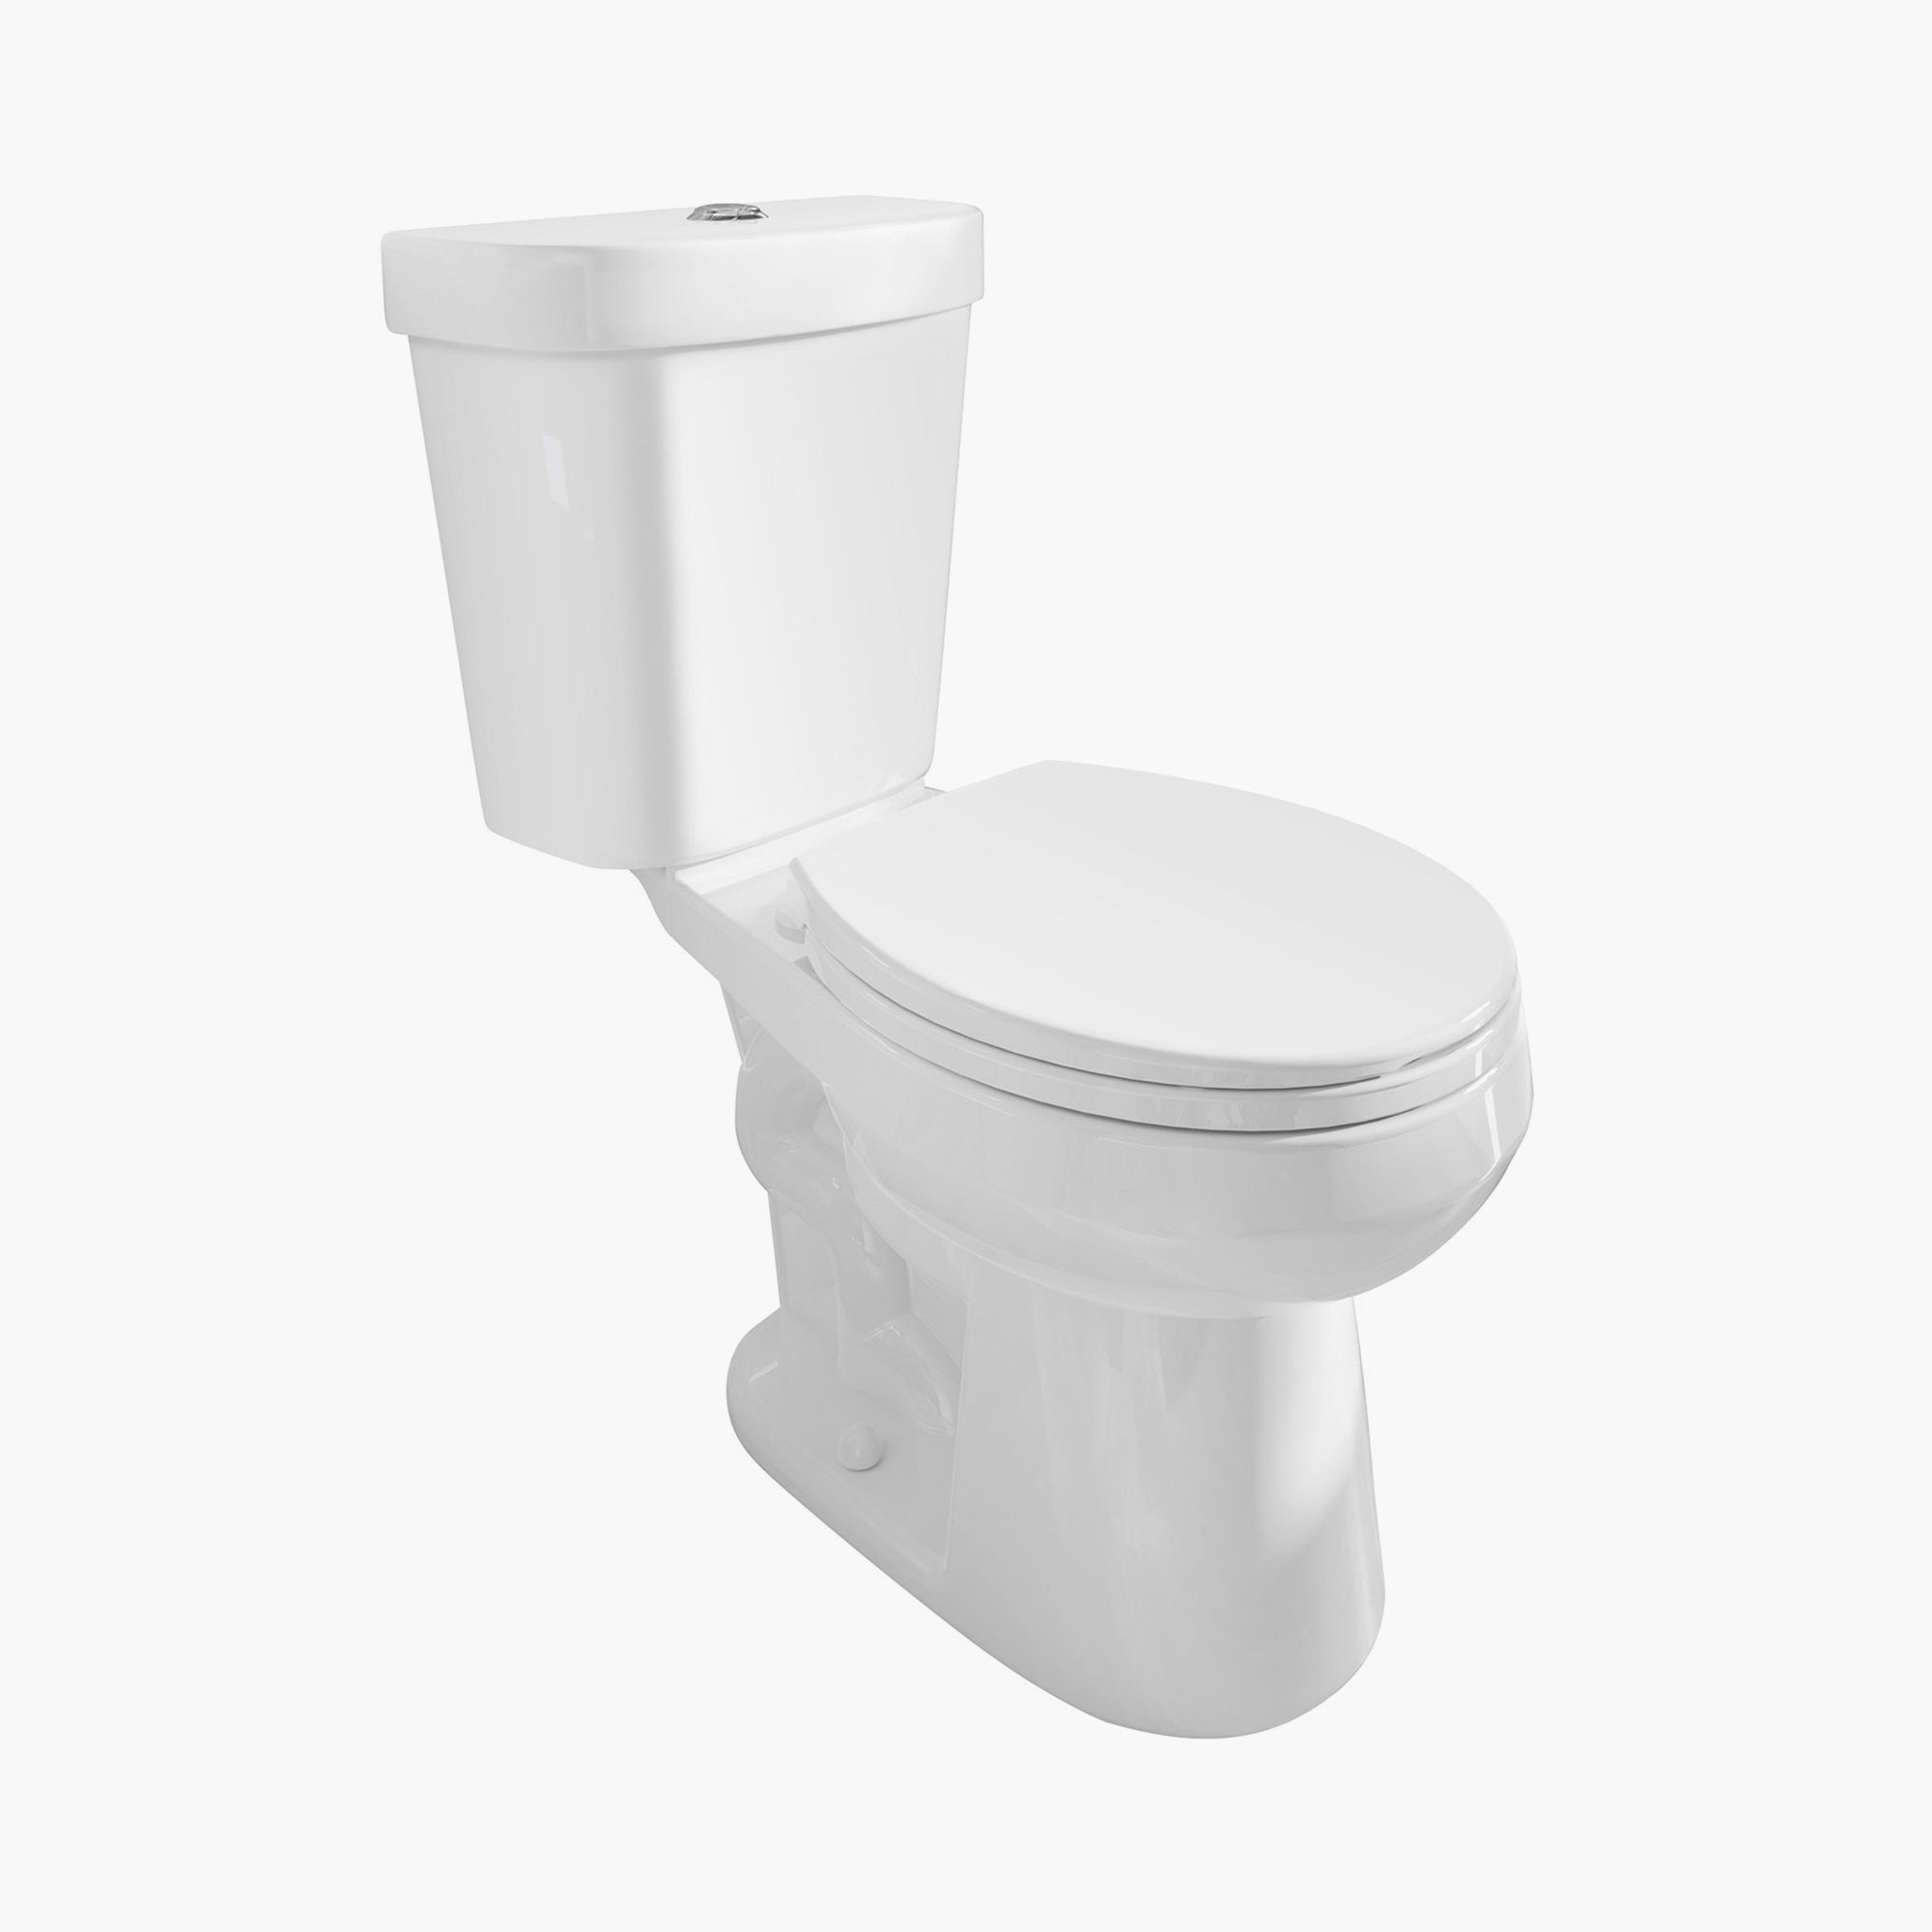 HOROW Dual Flush Round Toilet Floor Mounted Two Piece Toilet Model HWTT-R01D